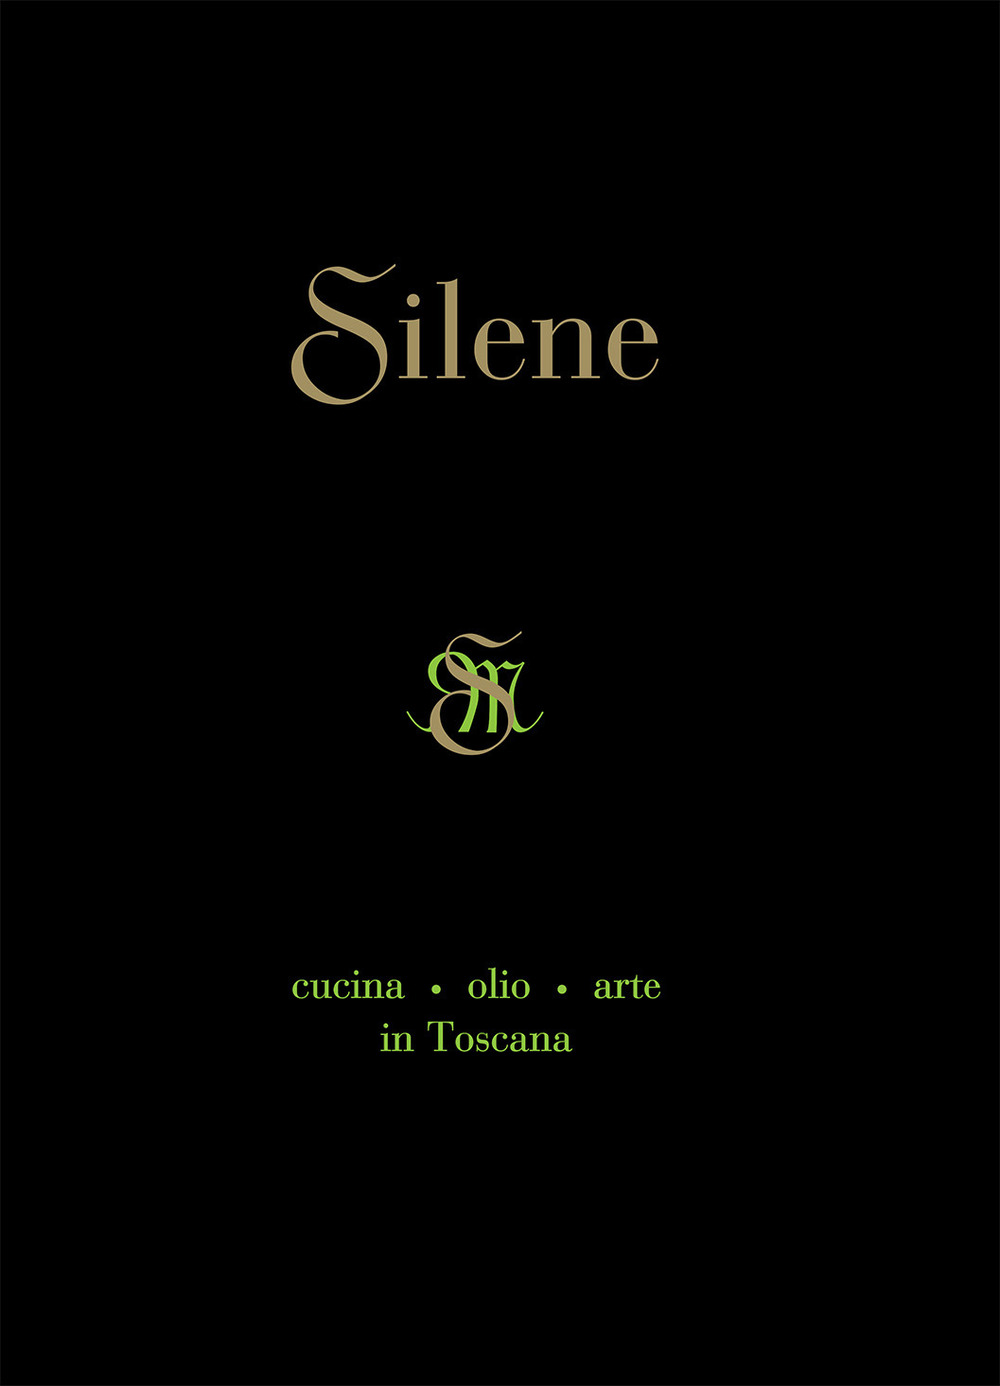 Silene. Cucina, olio, arte in Toscana